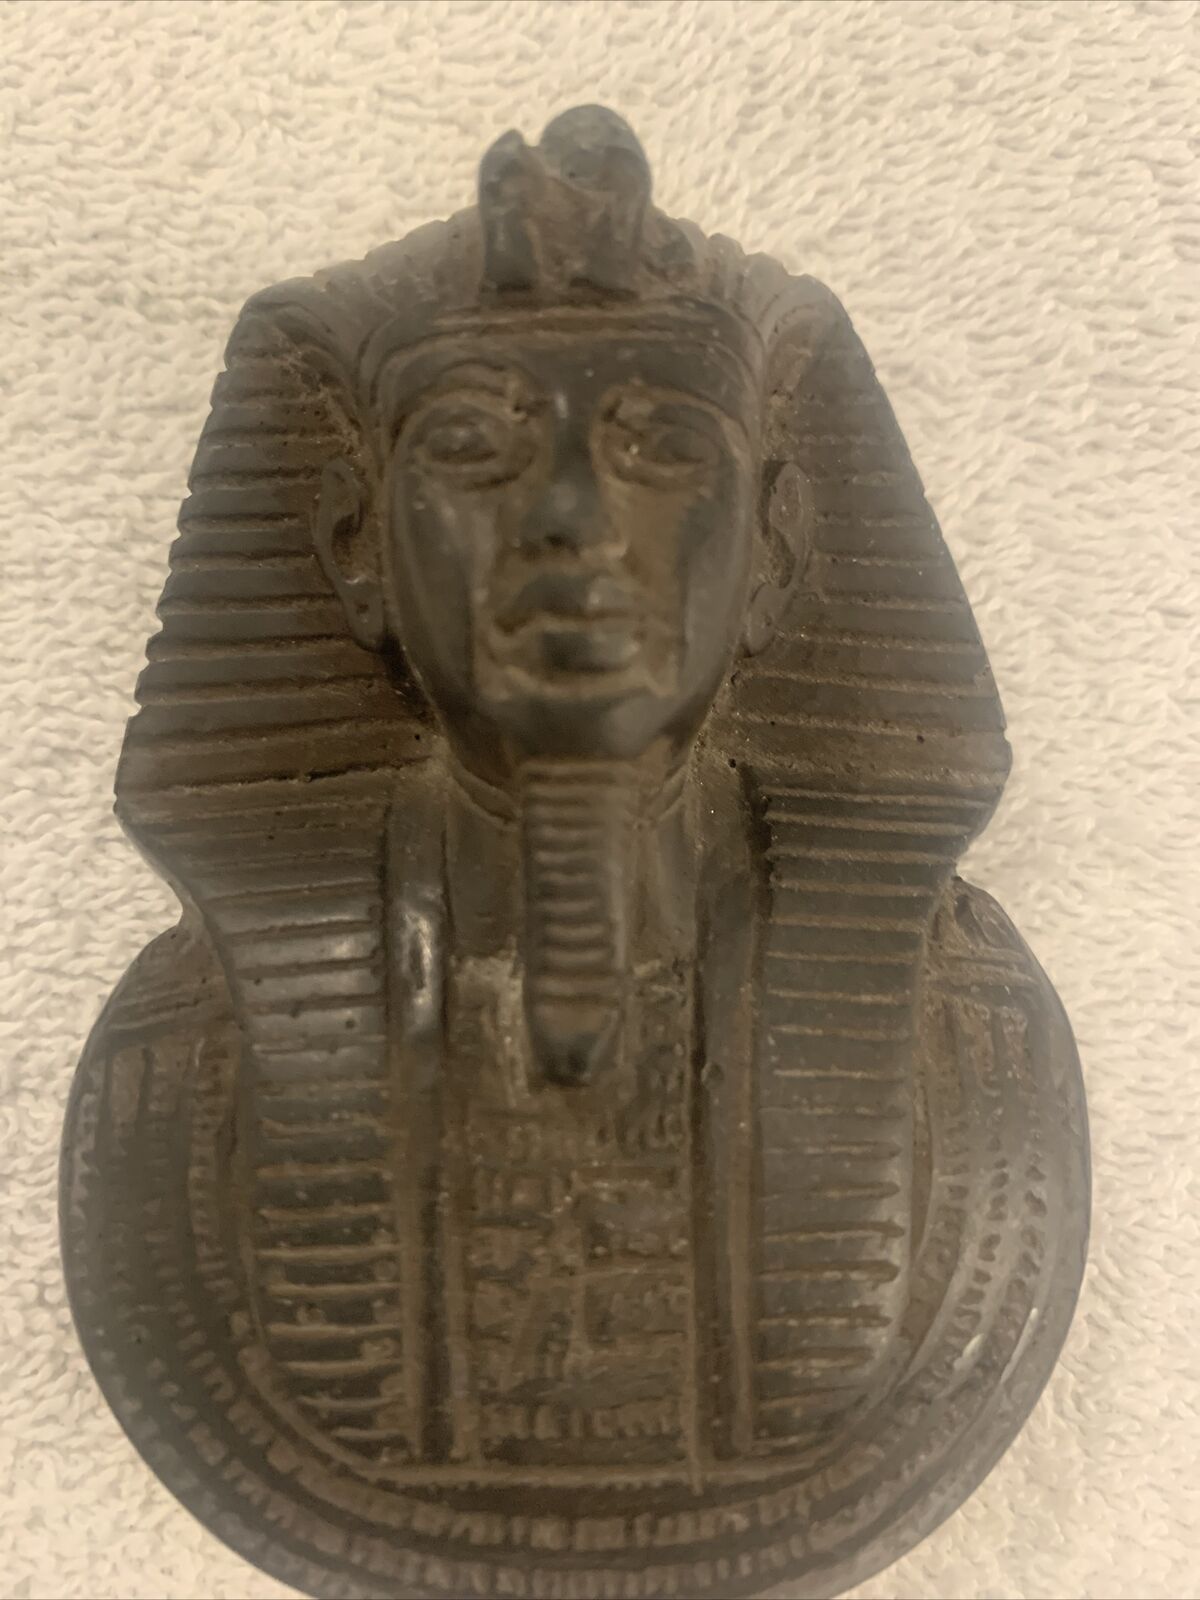 Egyptian Pharaoh Sculpture Figurine Vintage Resin Handcrafted Black.b4